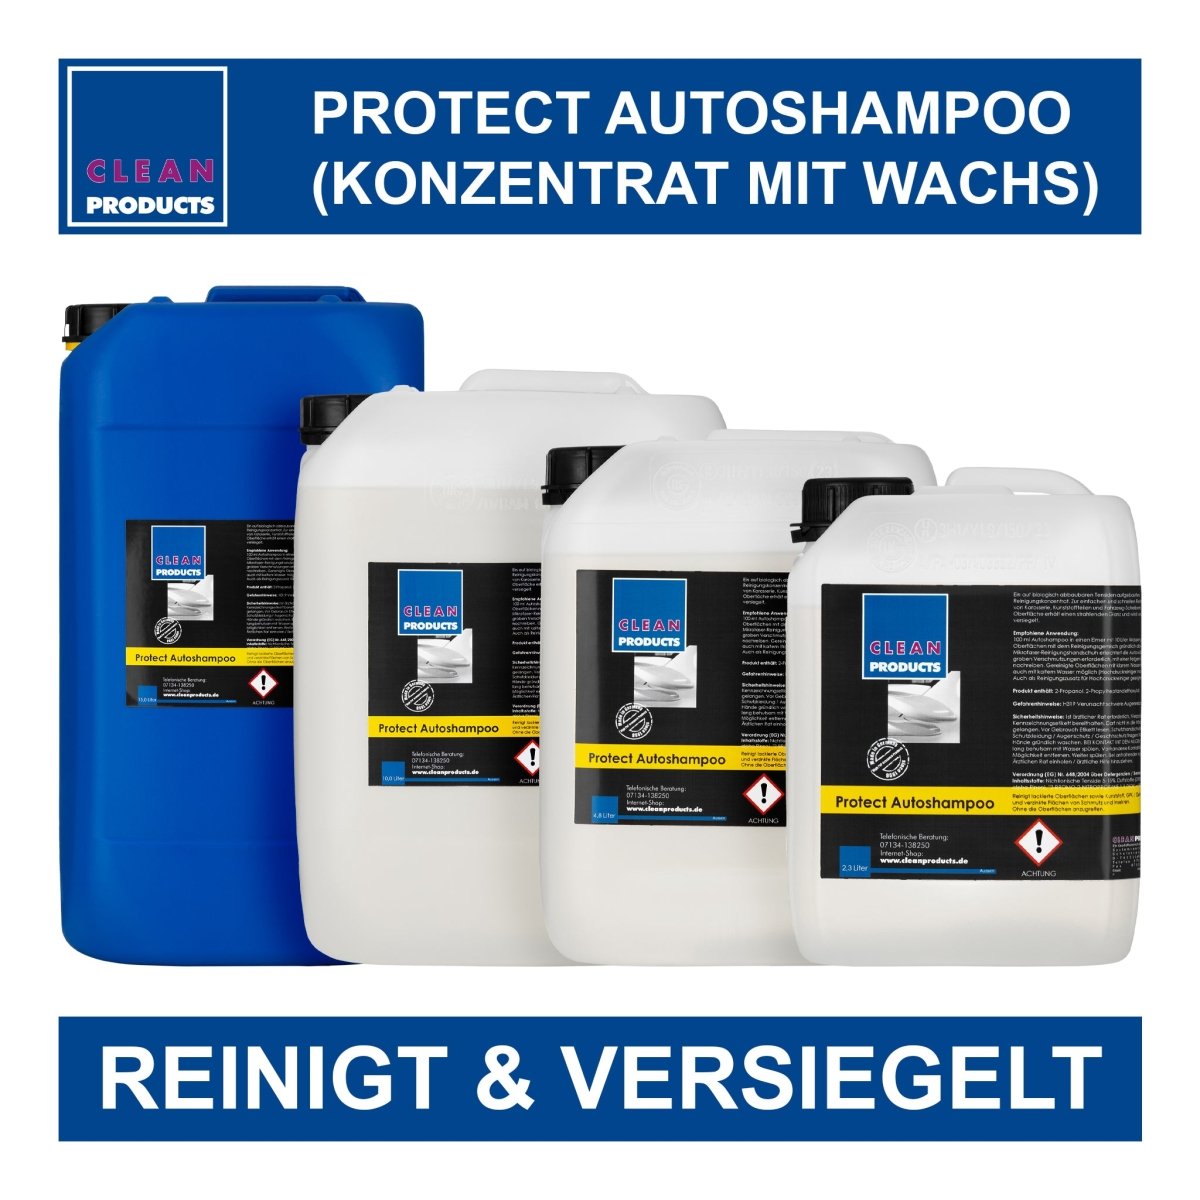 Protect Autoshampoo (Konzentrat mit Wachs) - 2,3 Liter - CLEANPRODUCTS